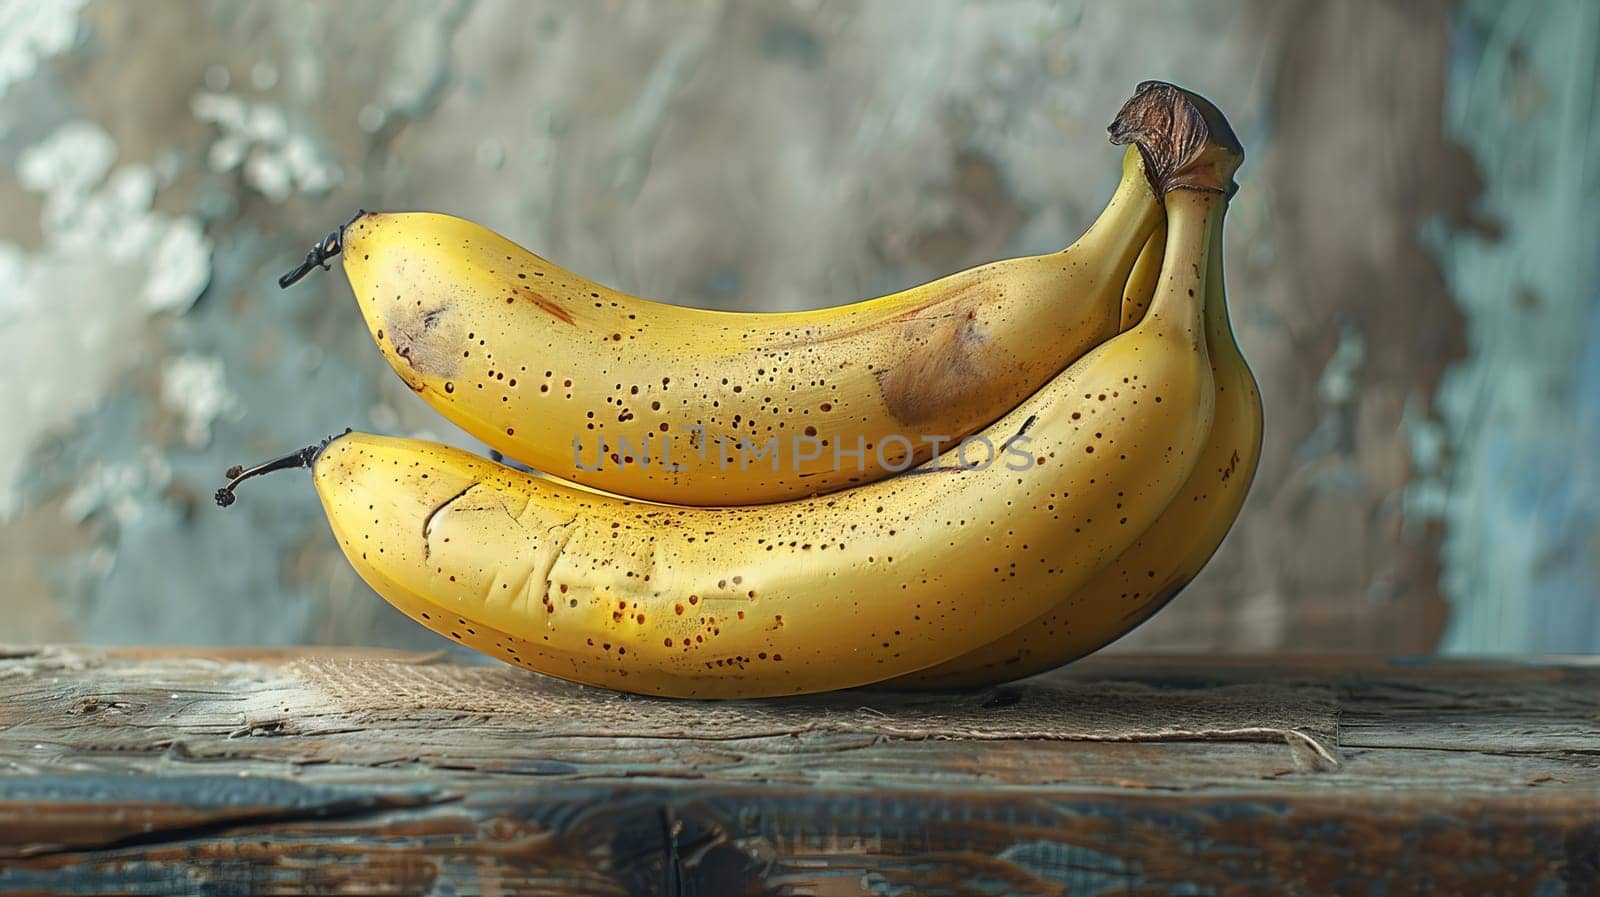 Overripe bananas on a wooden surface. AI generated by OlgaGubskaya